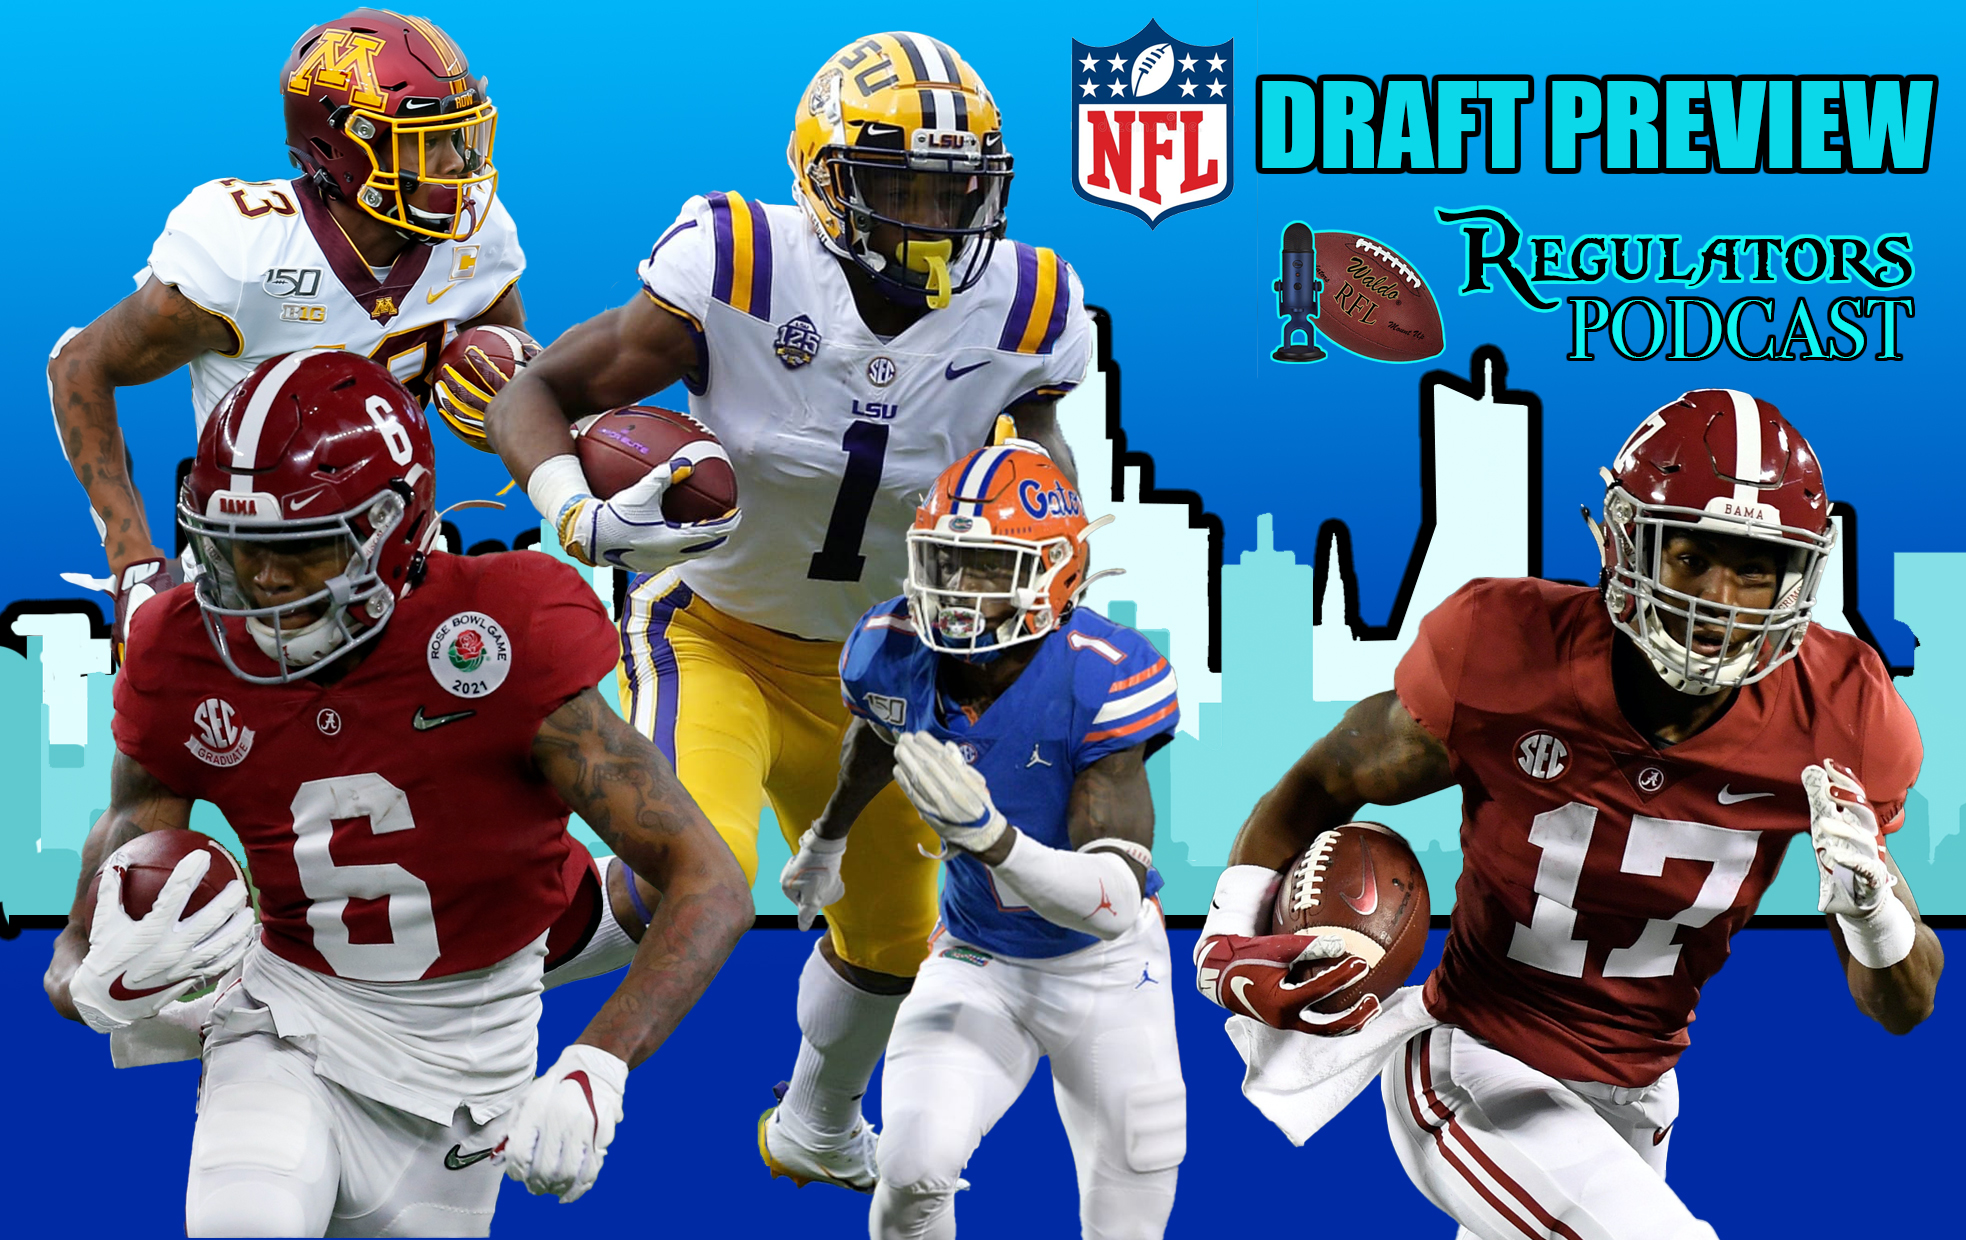 NFL Draft Preview WRs Regulators Podcast